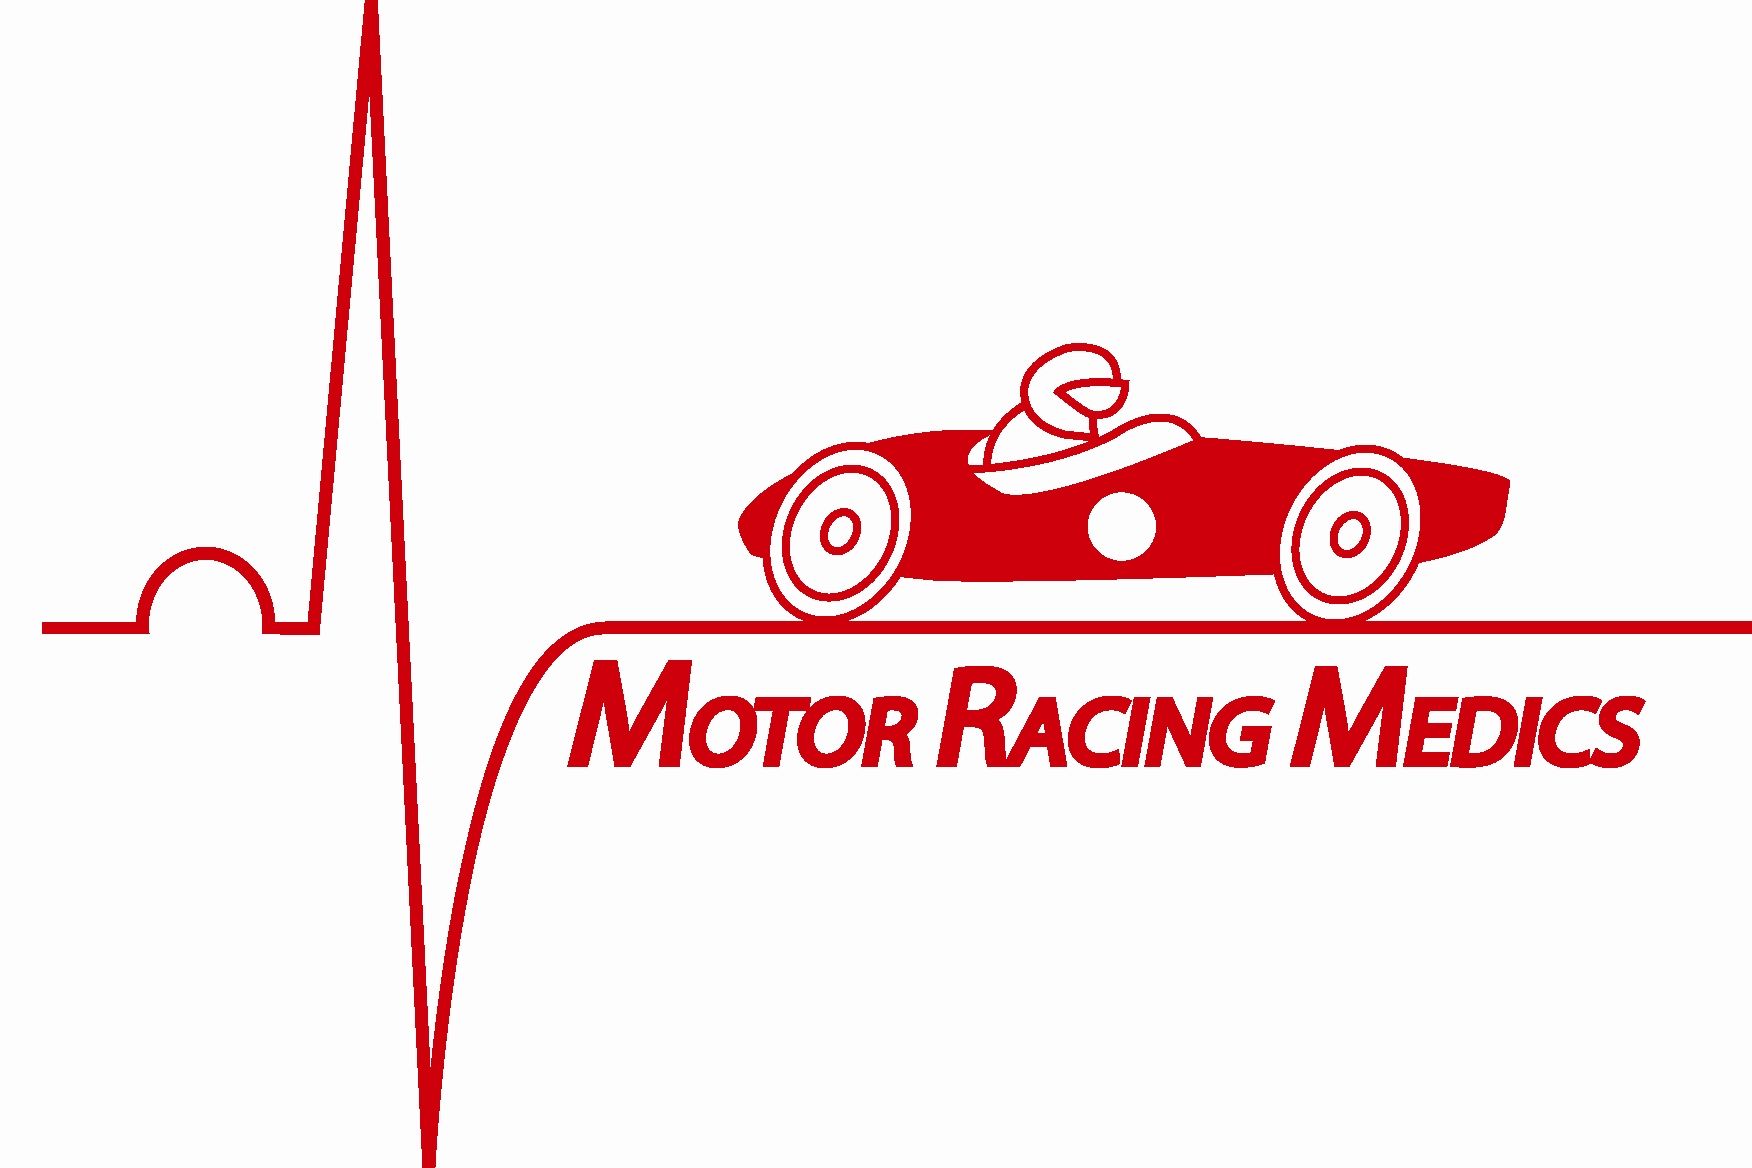 Motor Racing Medics Ltd